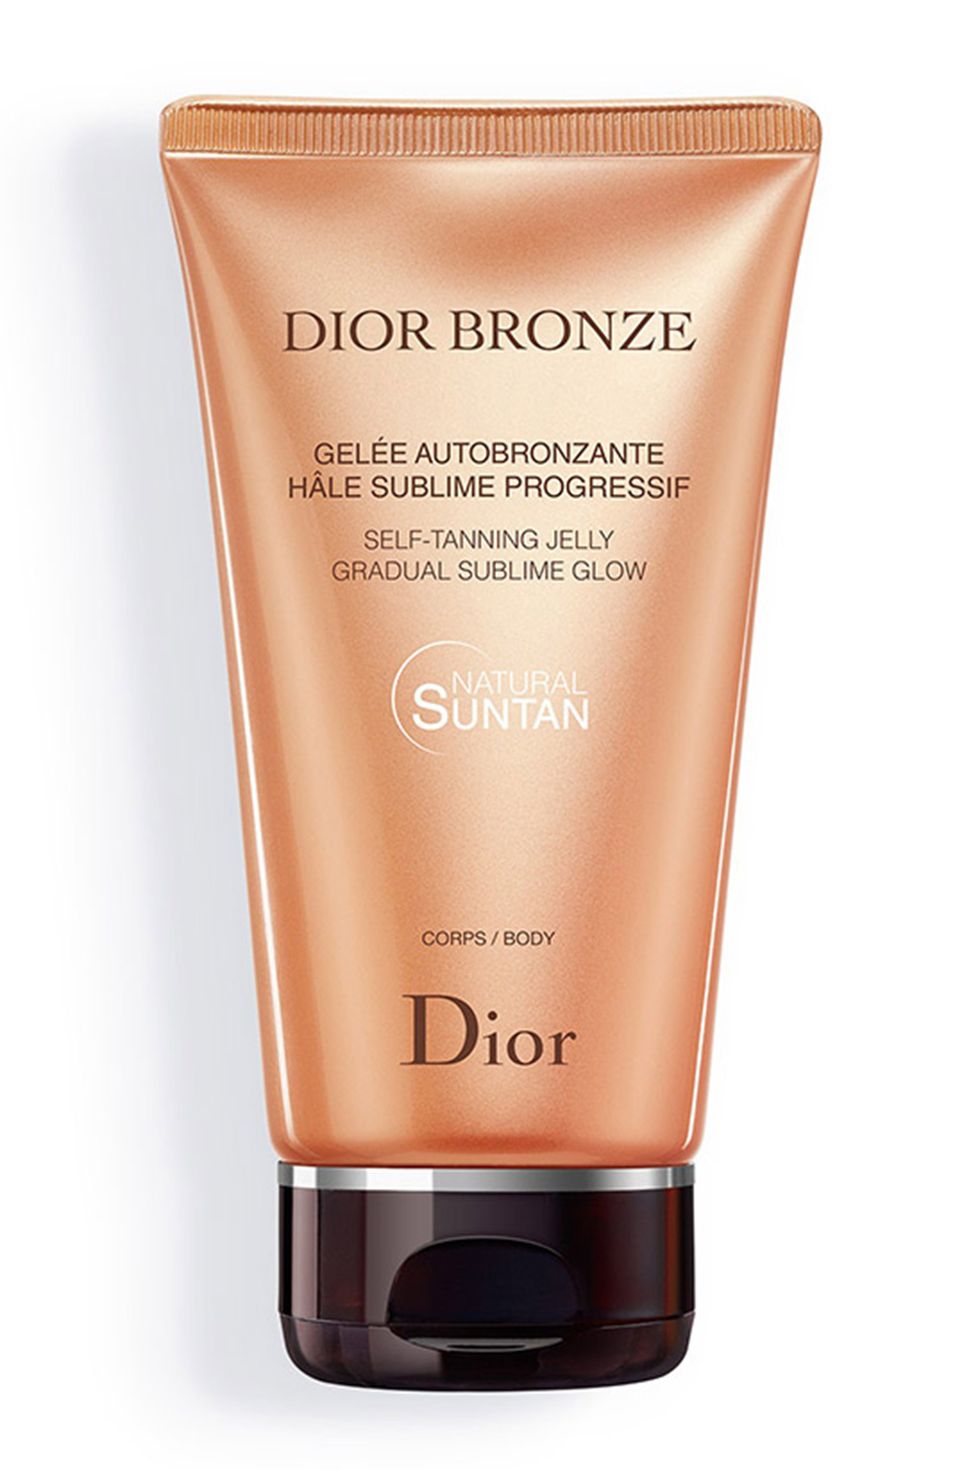 Dior Bronze self-tan